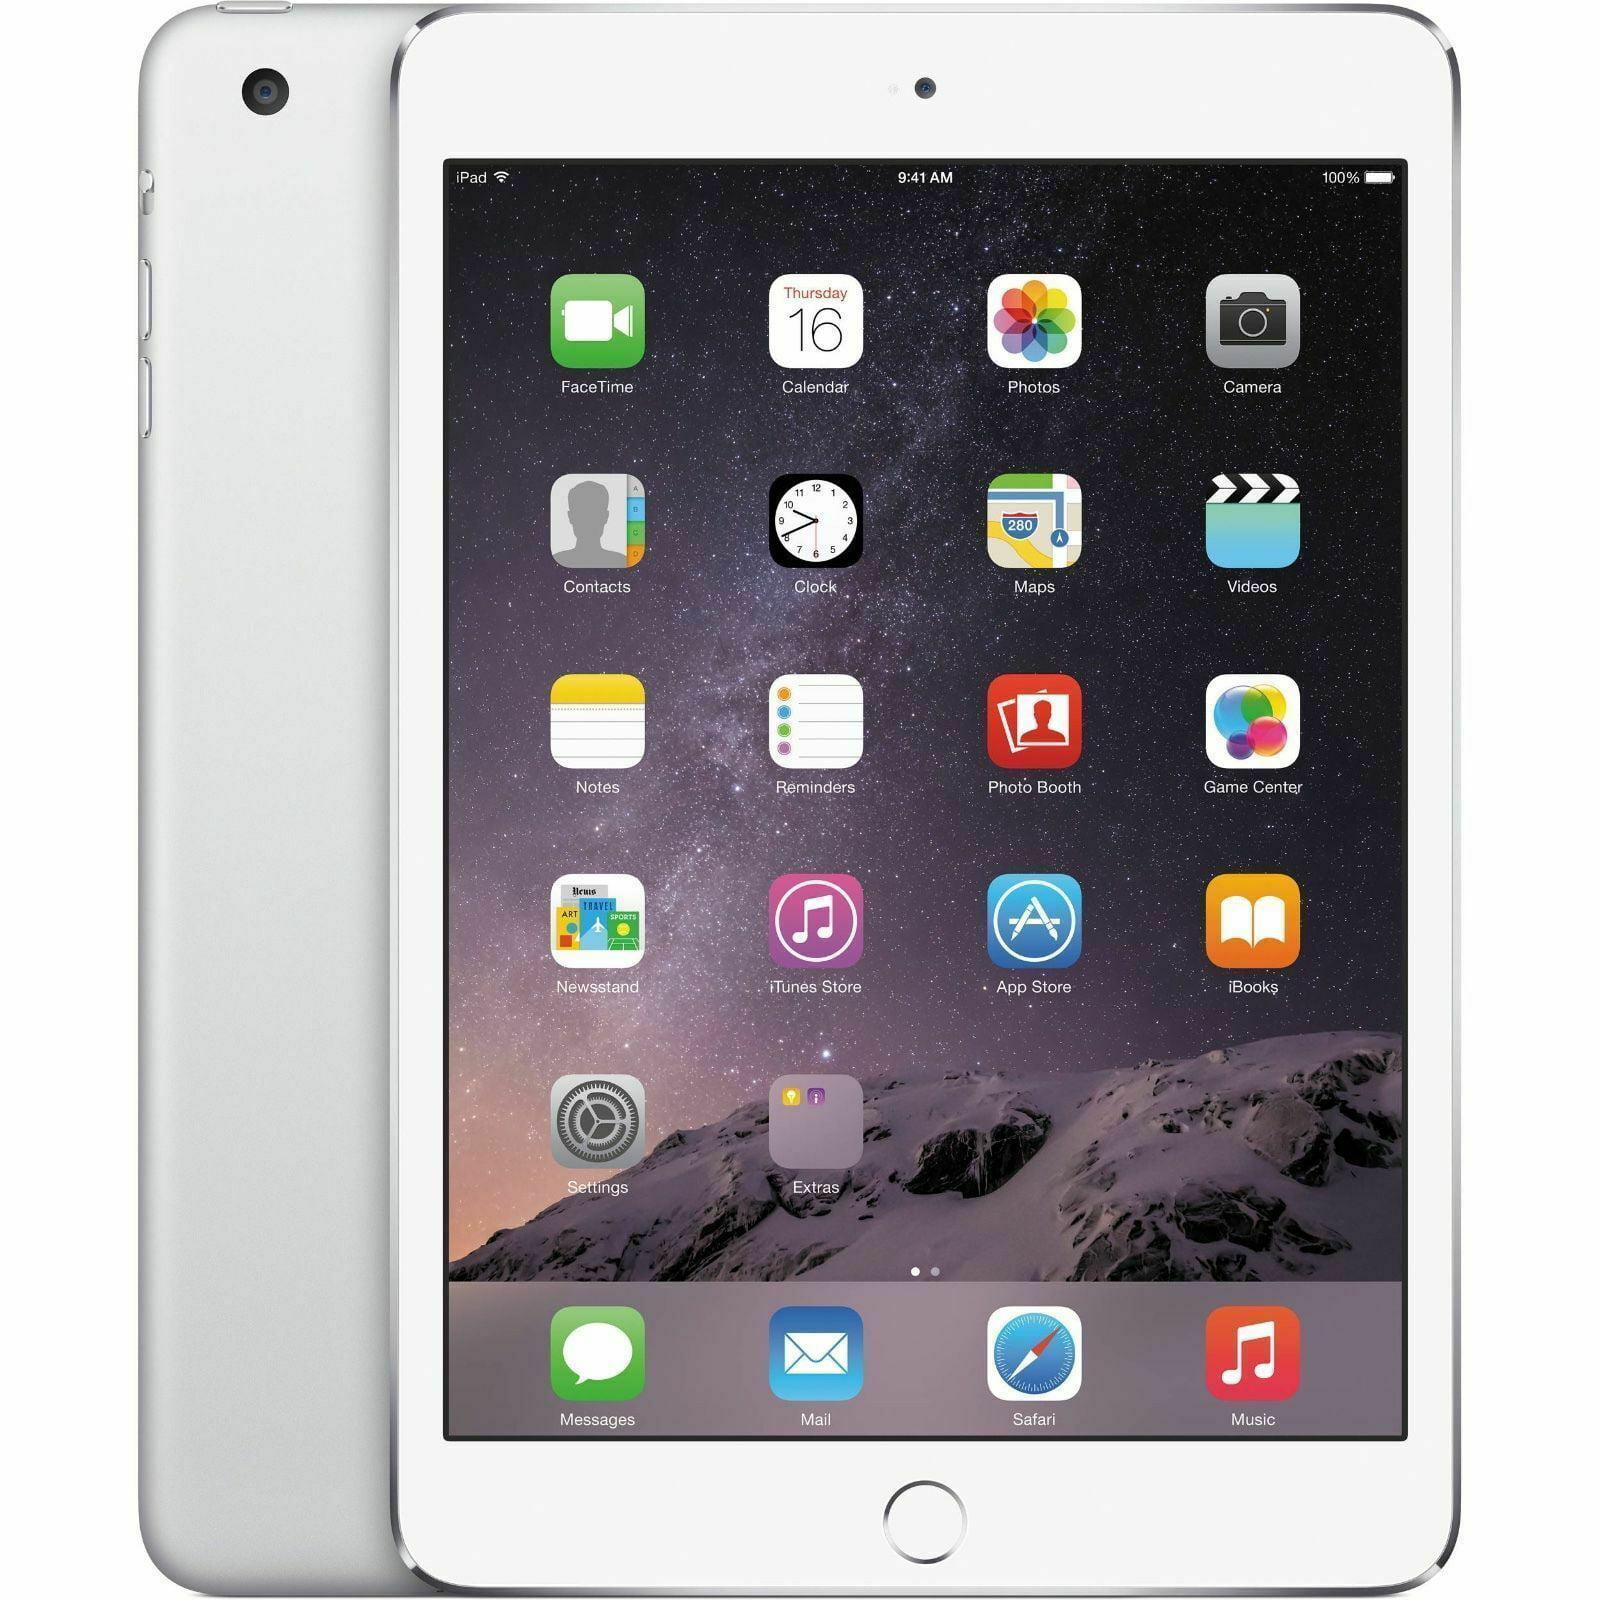 Apple iPad 3 16GB MC705LL/A A1416 Wi-Fi 9.7in Black and Silver WiFi Great Deal 